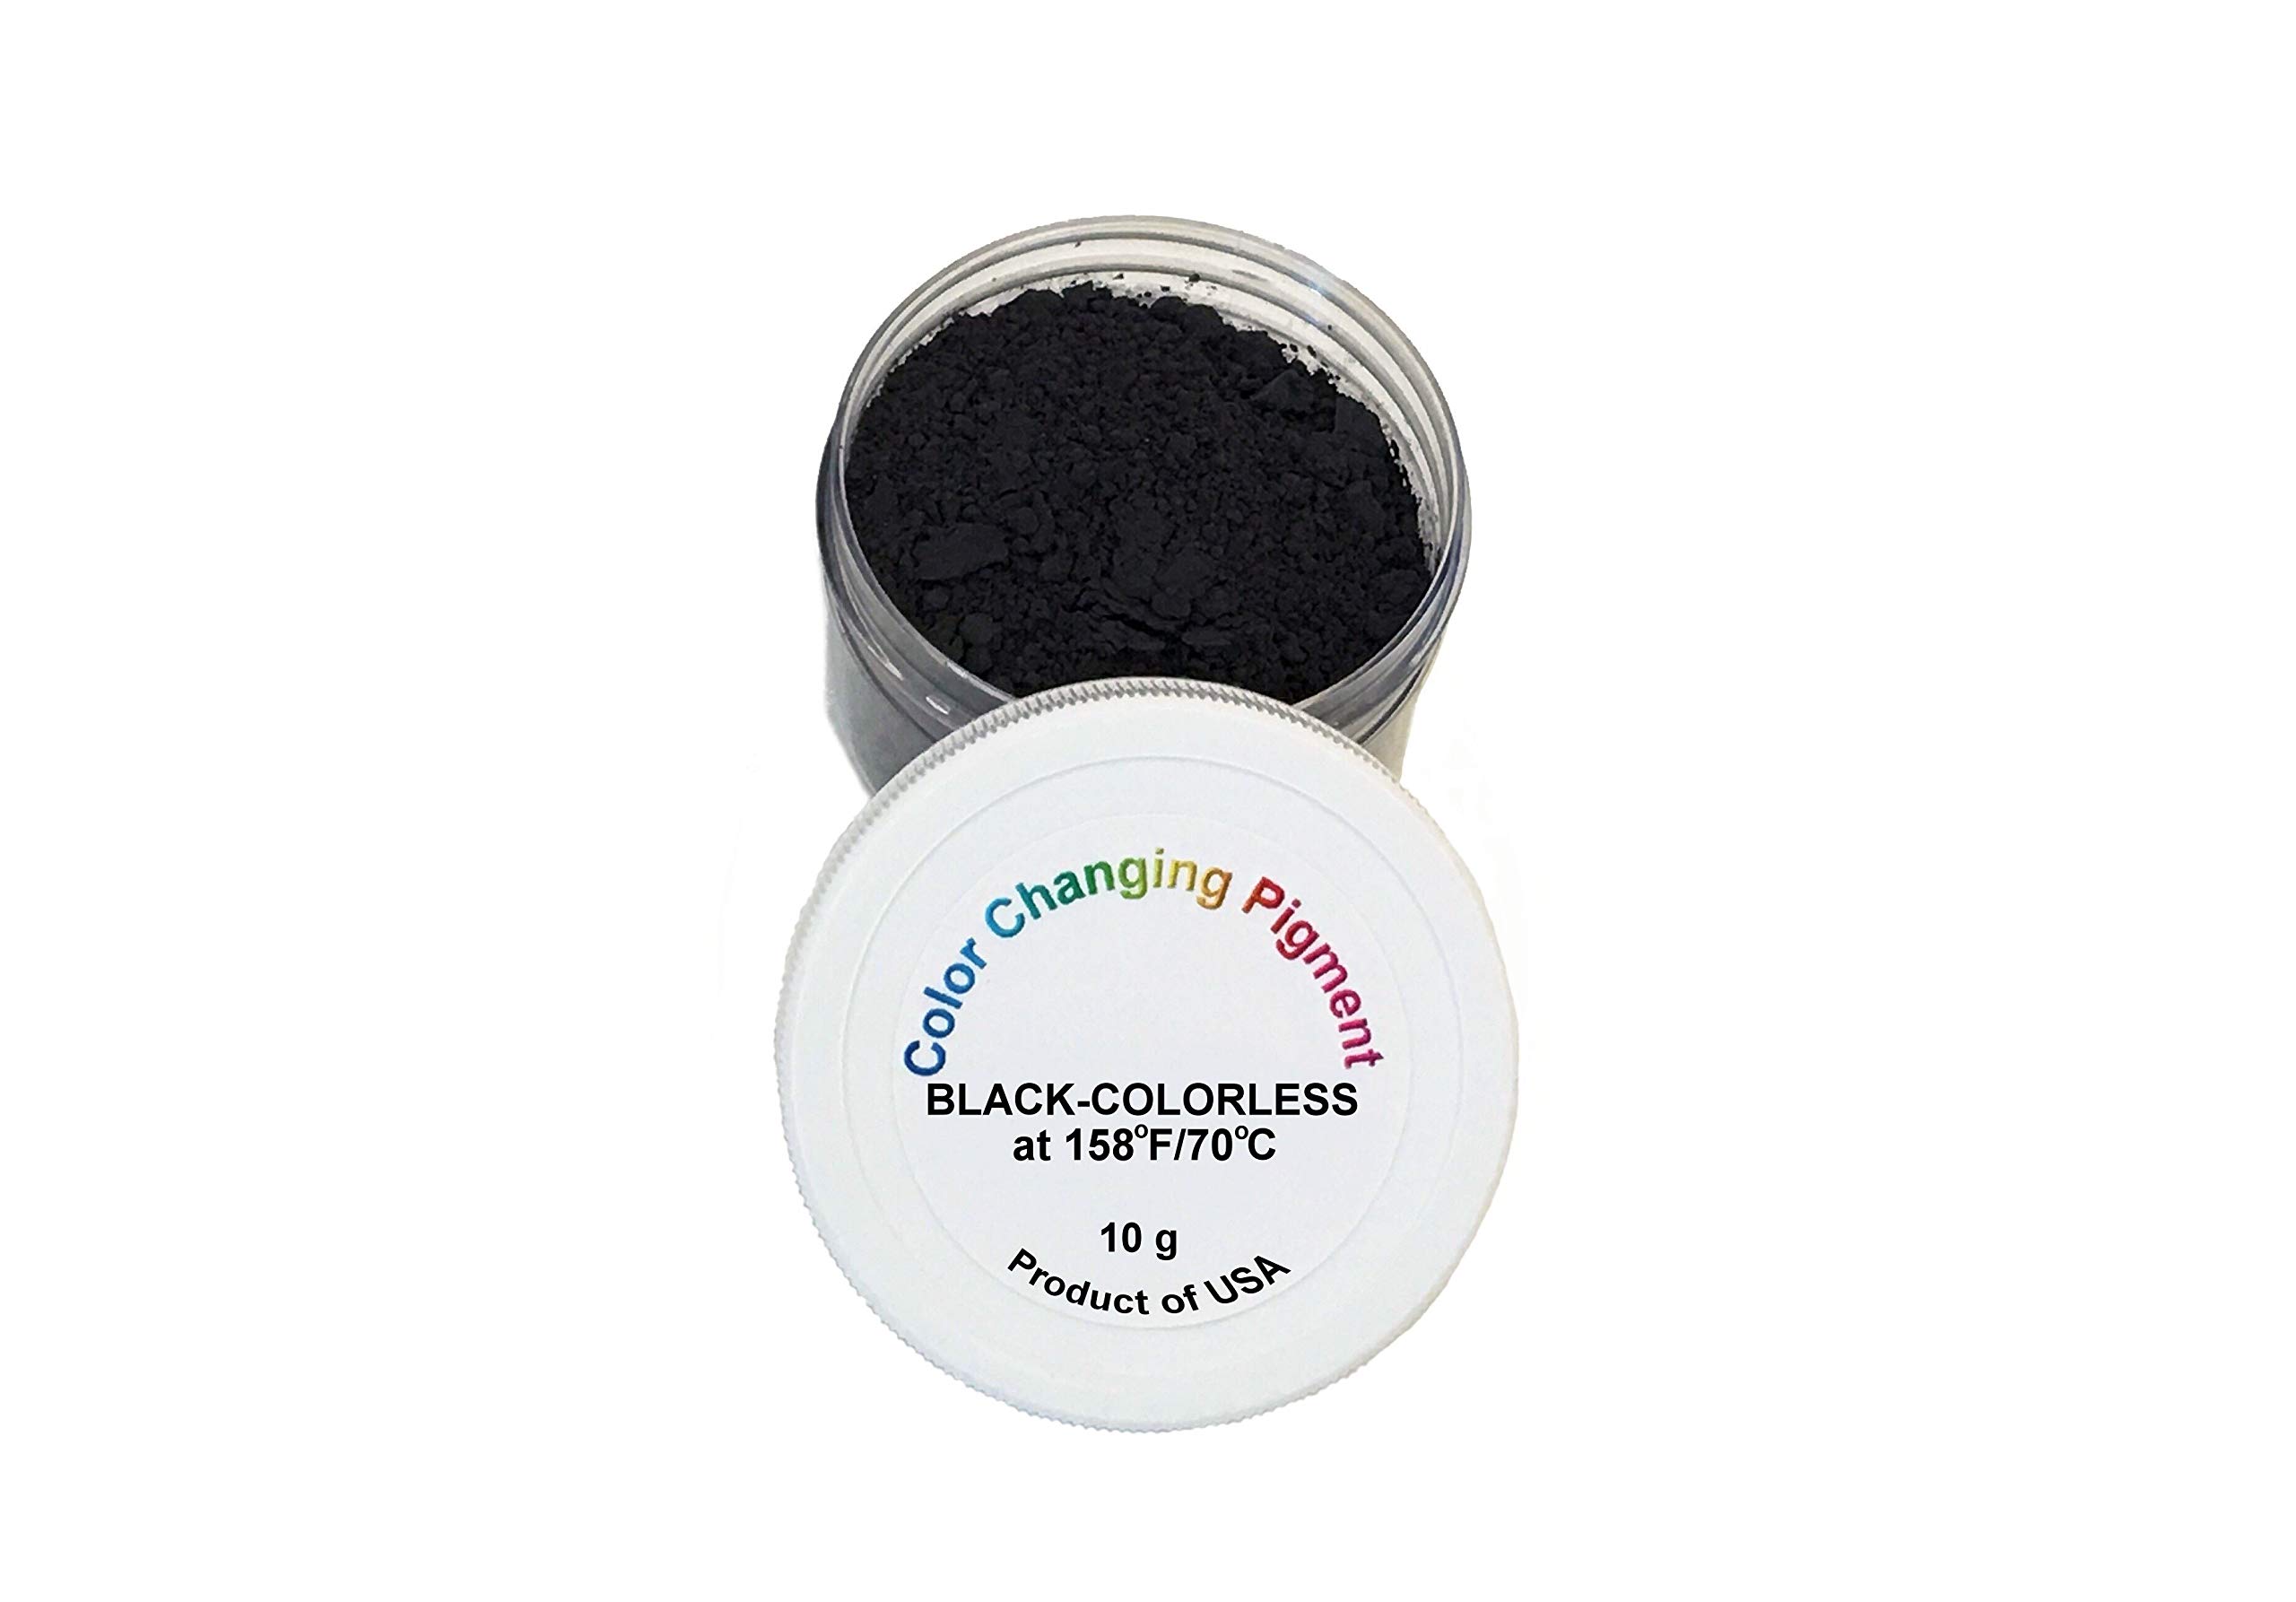 Thermochromic Pigment Powder Heat Sensitive Color Changing Goo